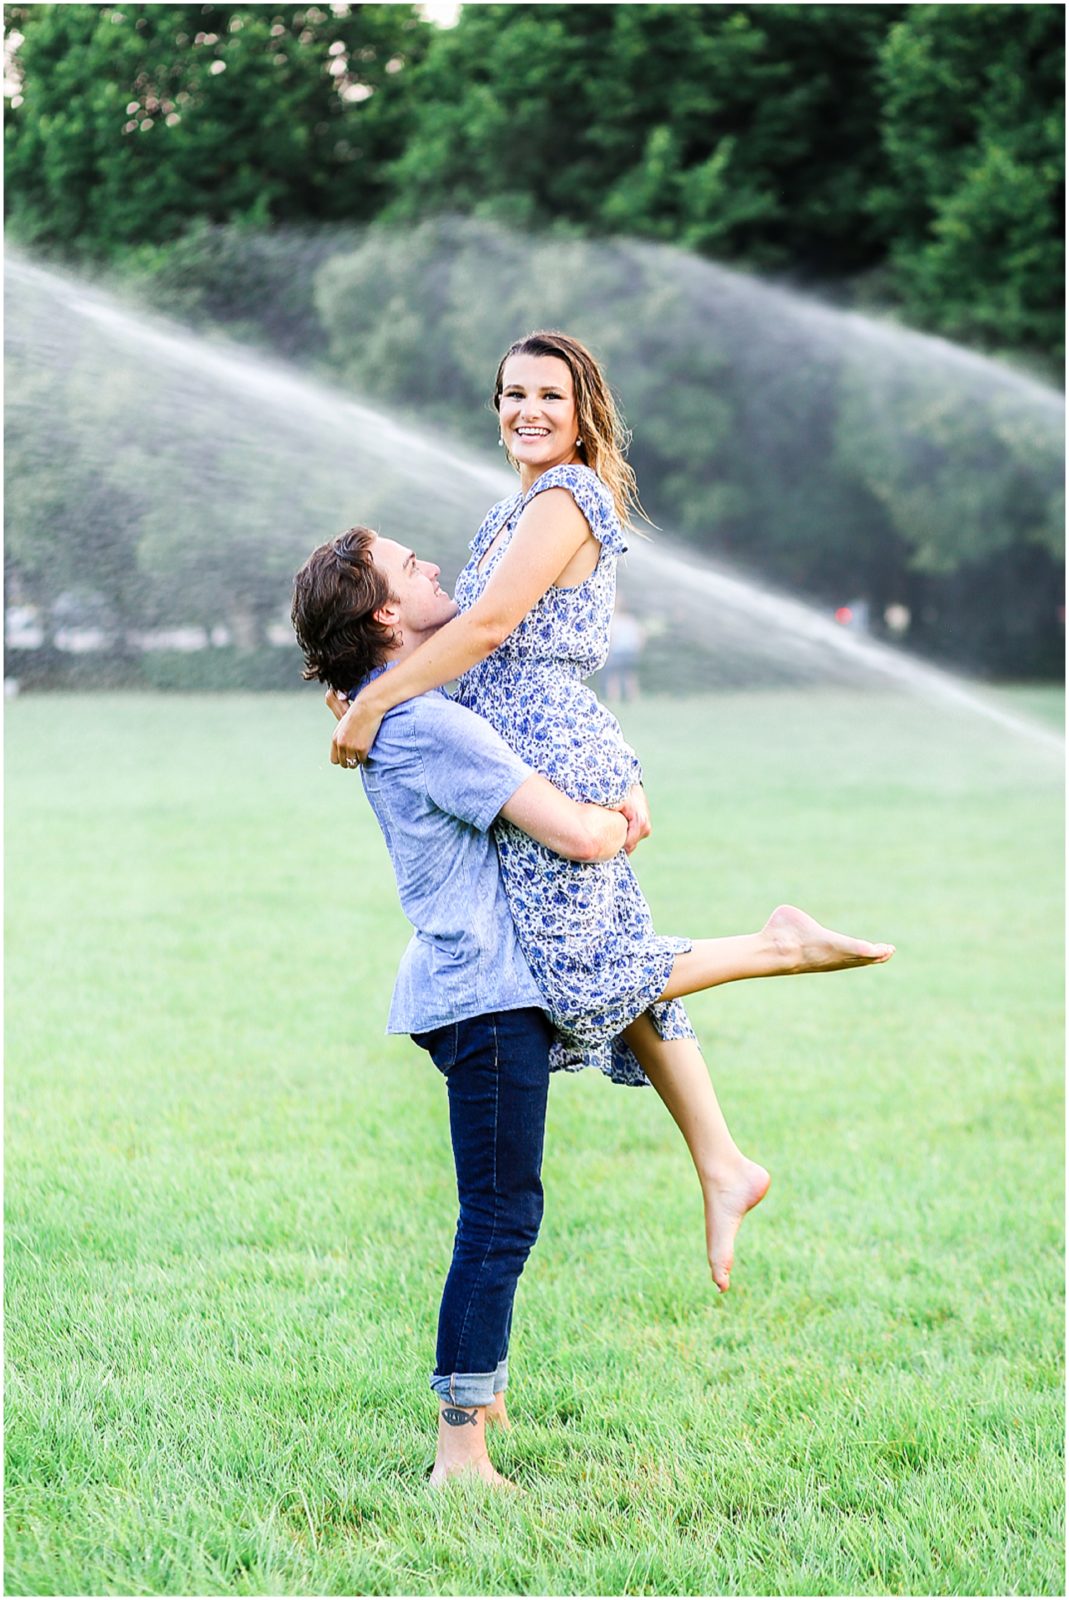 couple running the rain for their engagement photos - fun photos - fun photographer - luxury weddings - hawthorne house - missouri